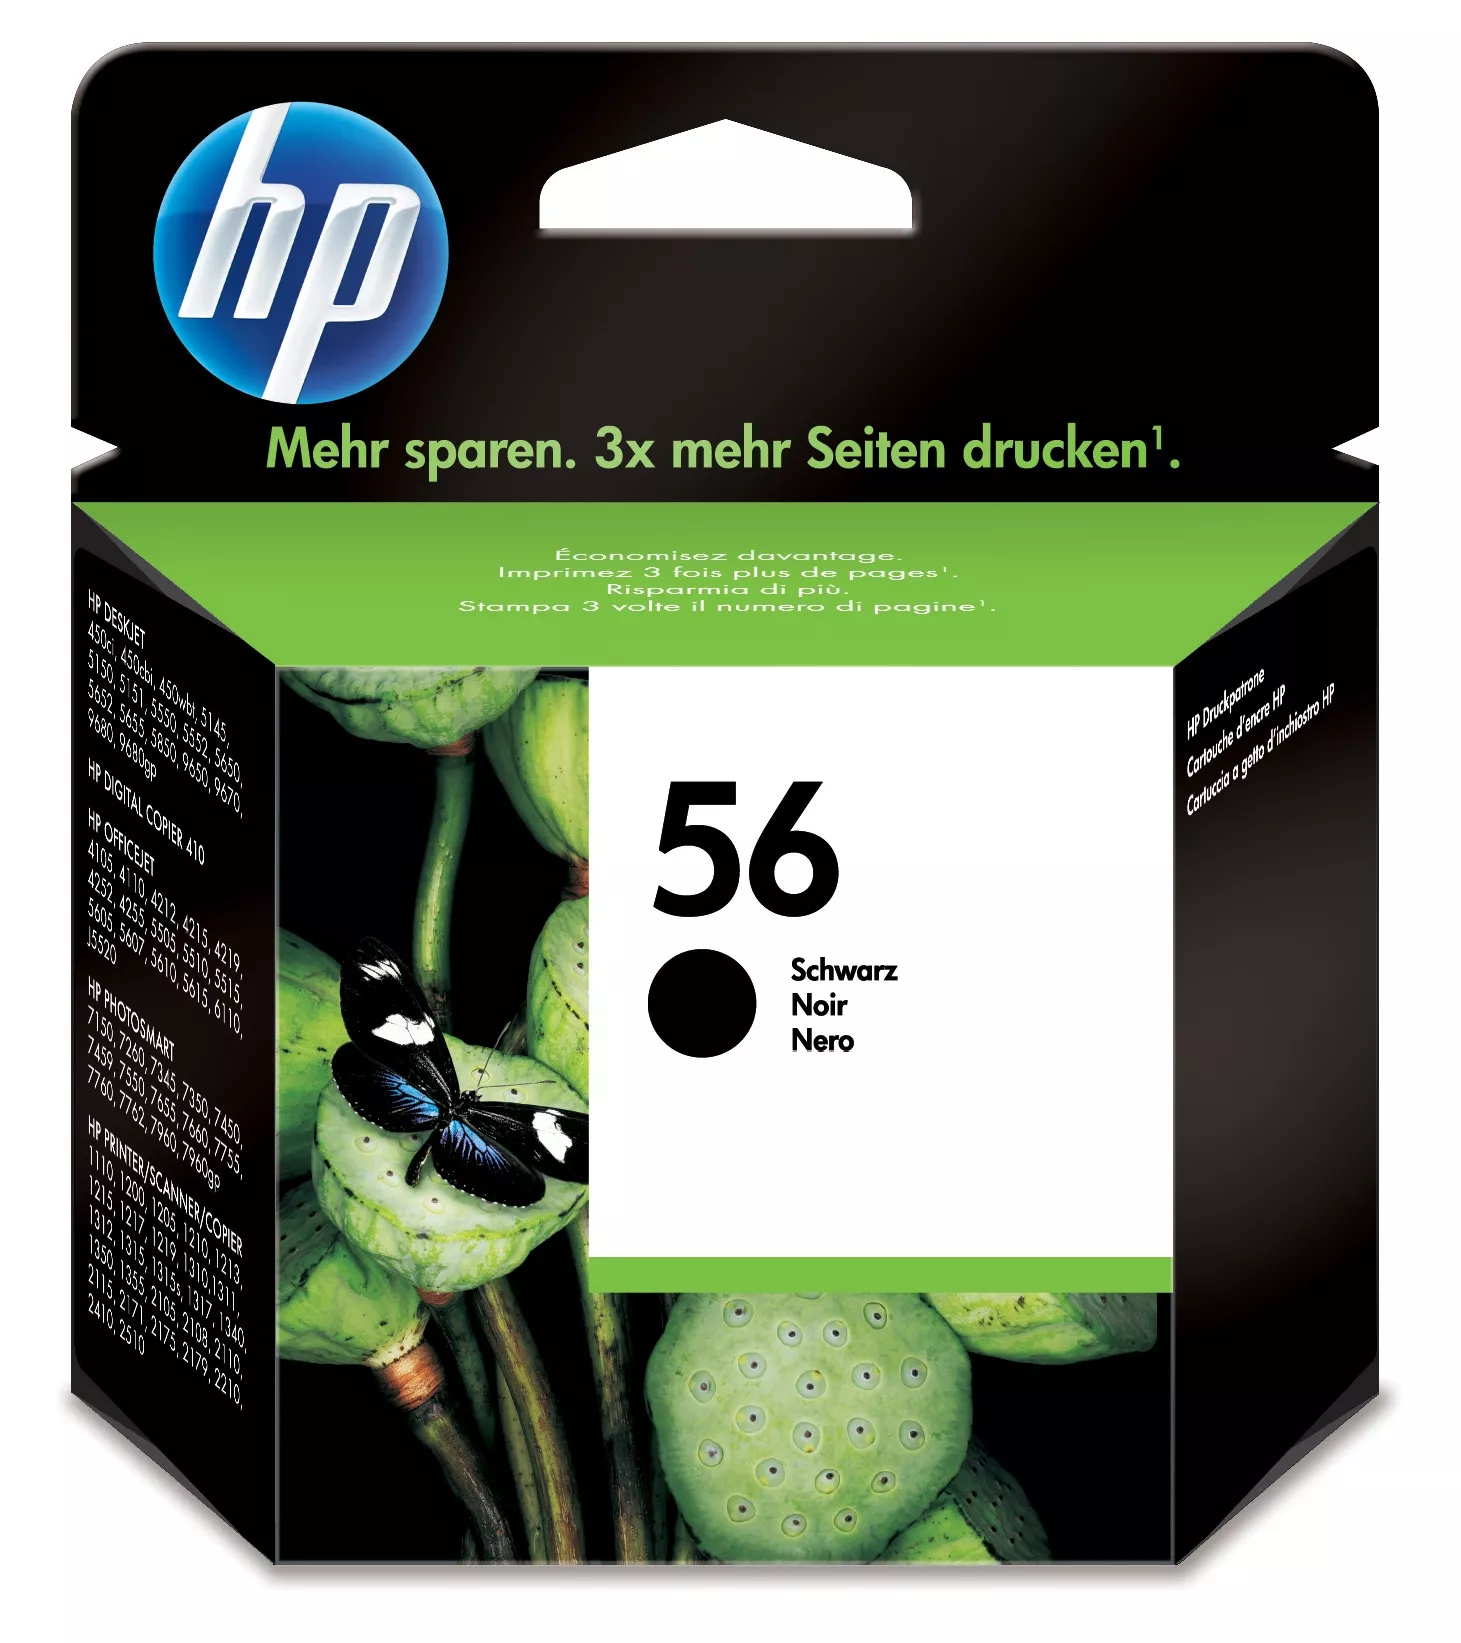 Achat HP 56 original Ink cartridge C6656AE UUS black high capacity au meilleur prix